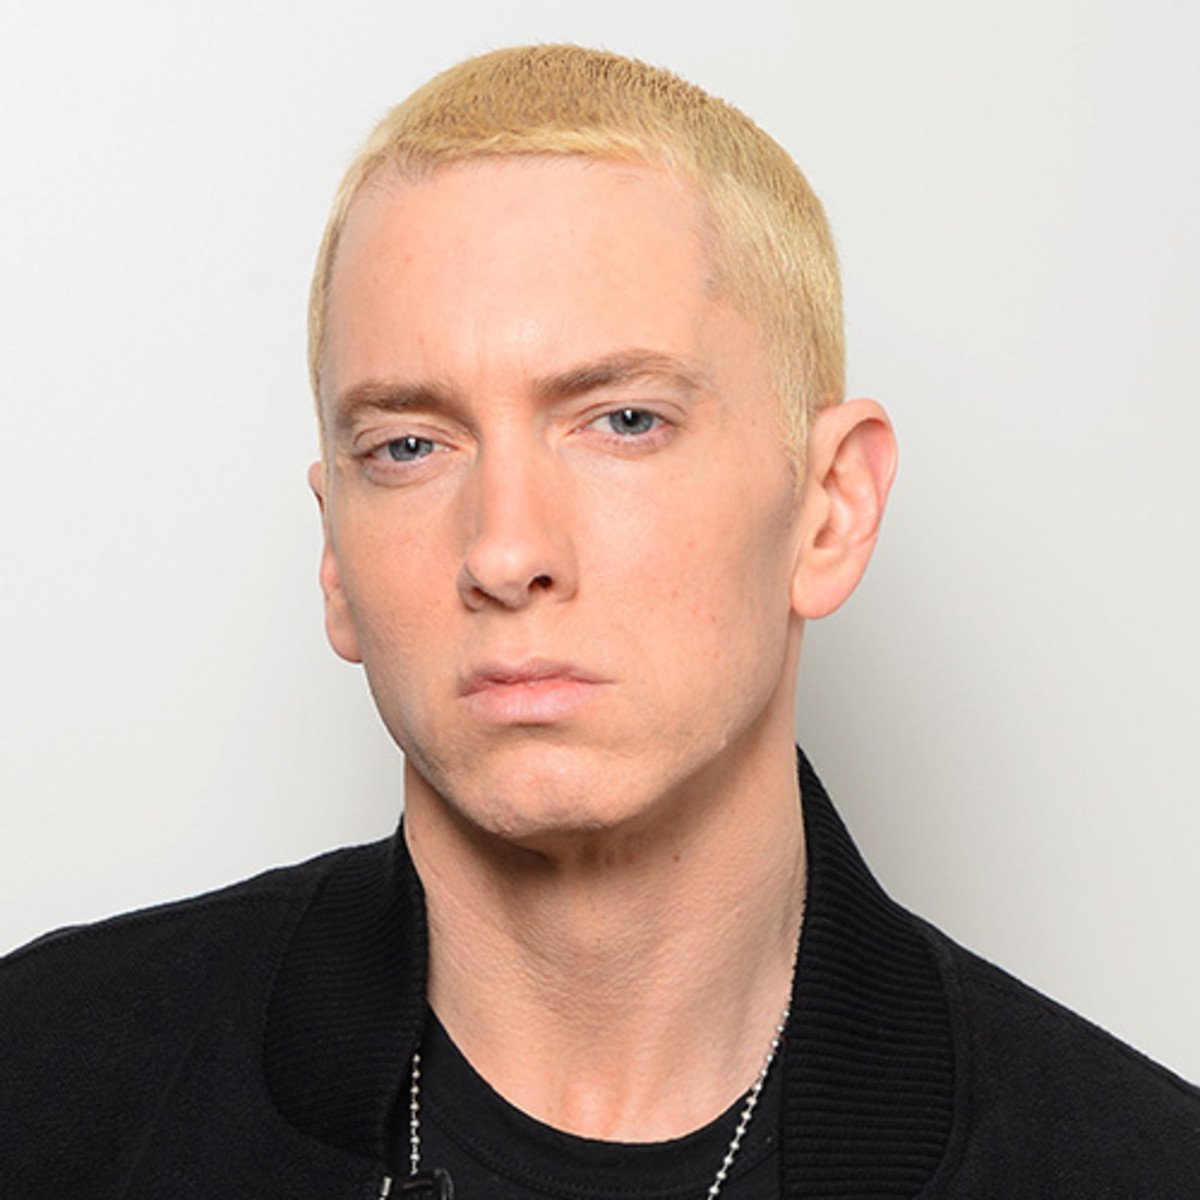 Eminem - Songs, Daughter &amp; Age - Biography